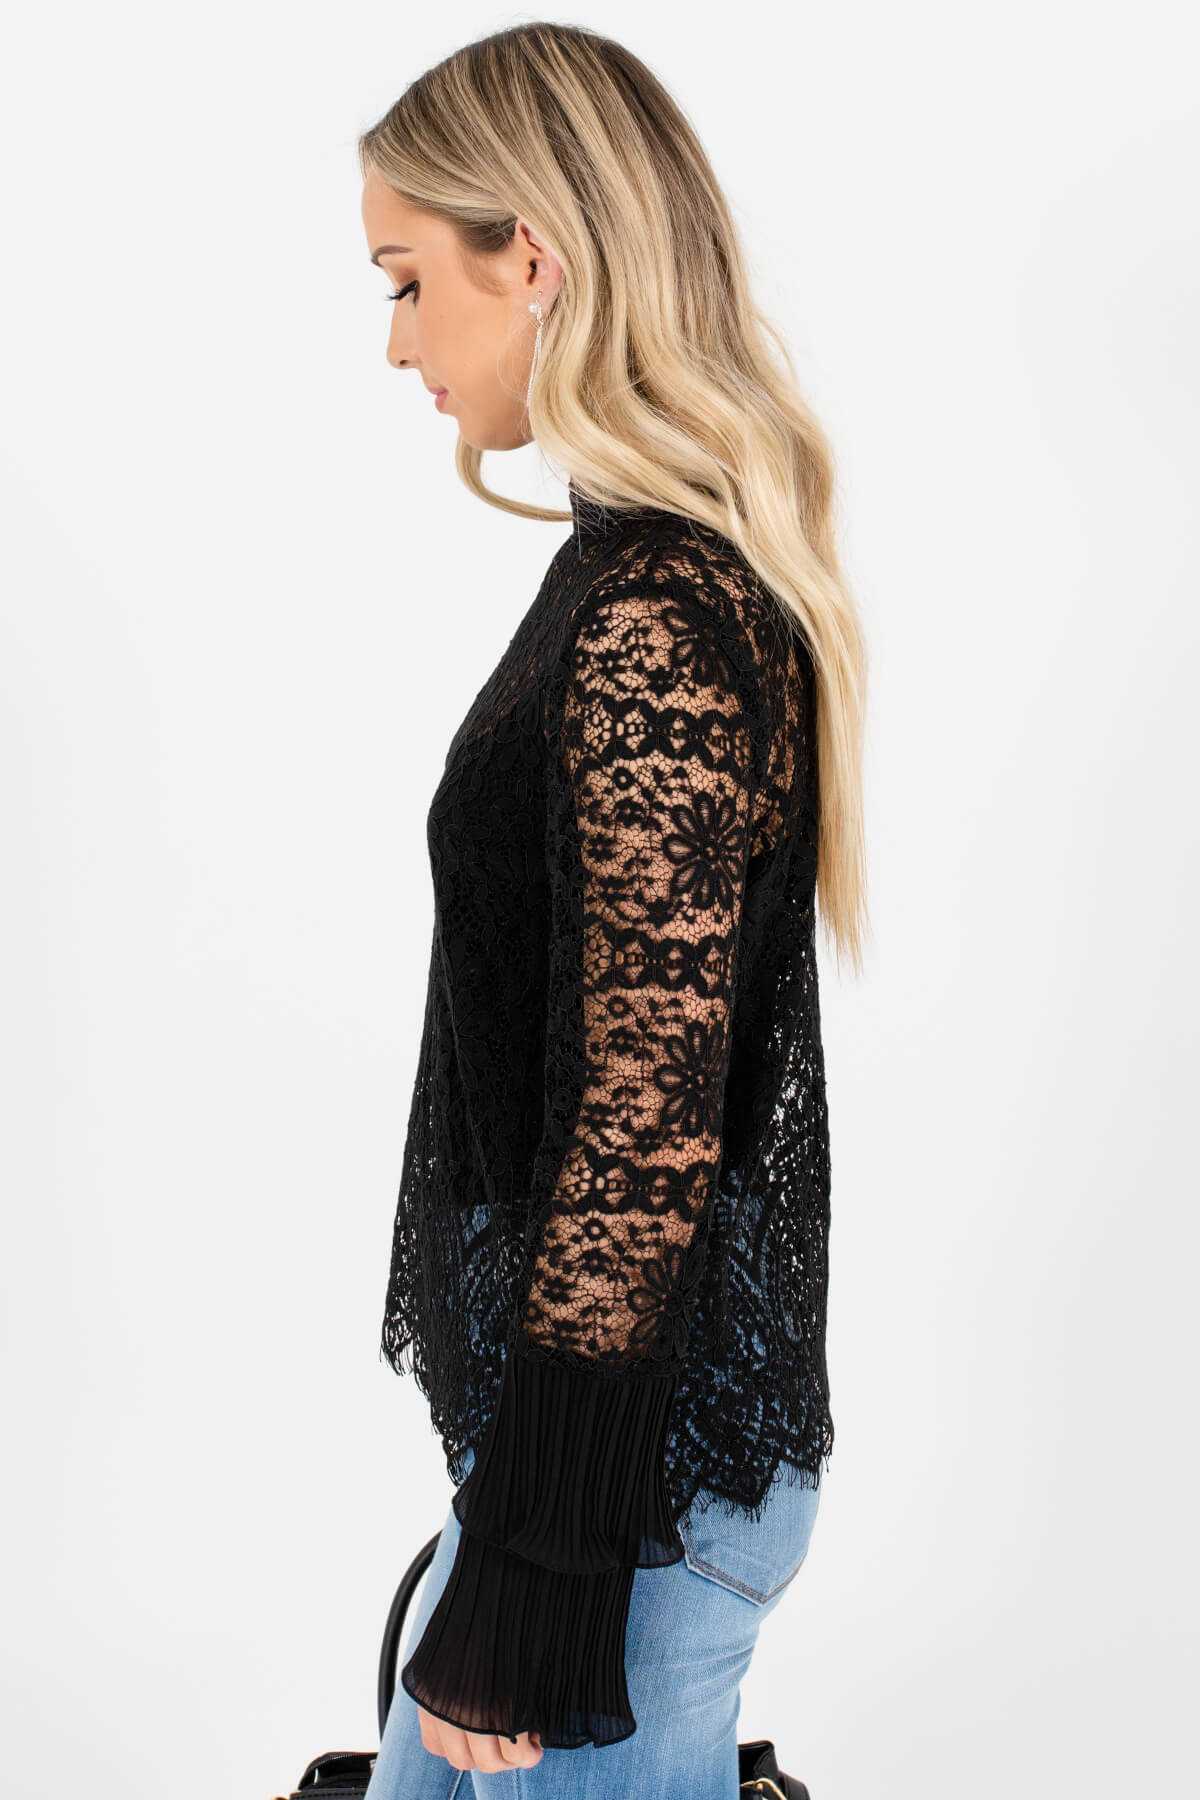 Ellena Black Lace Long Sleeve Crop Top